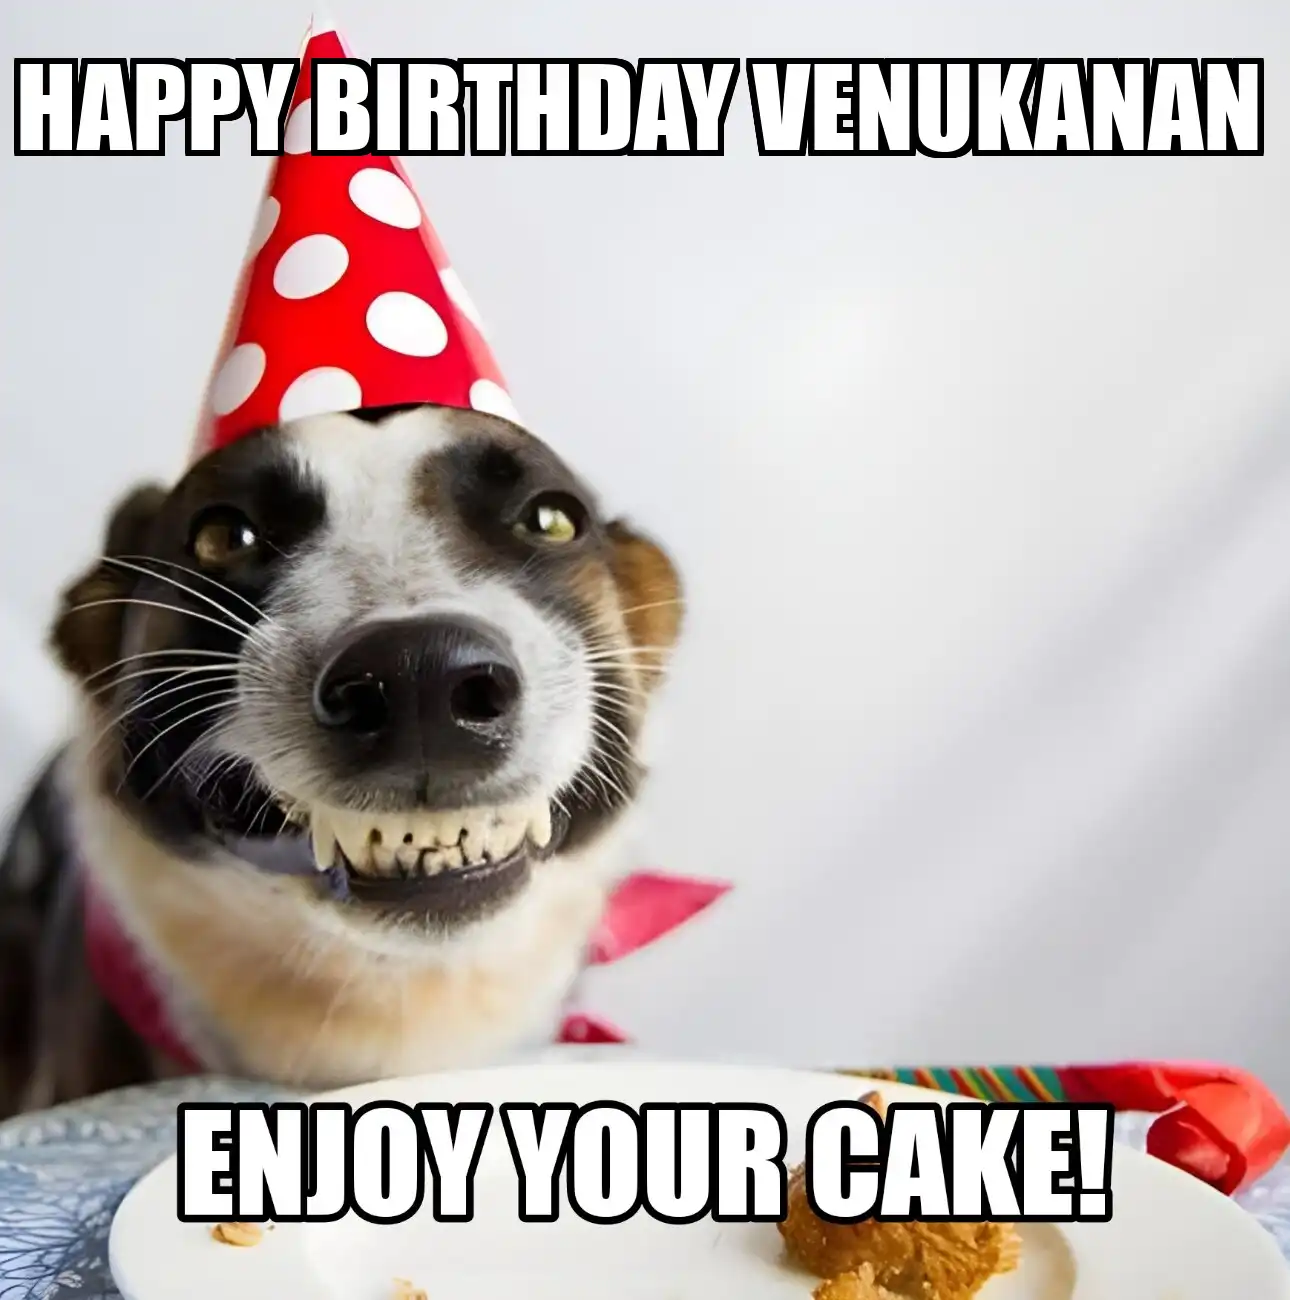 Happy Birthday Venukanan Enjoy Your Cake Dog Meme